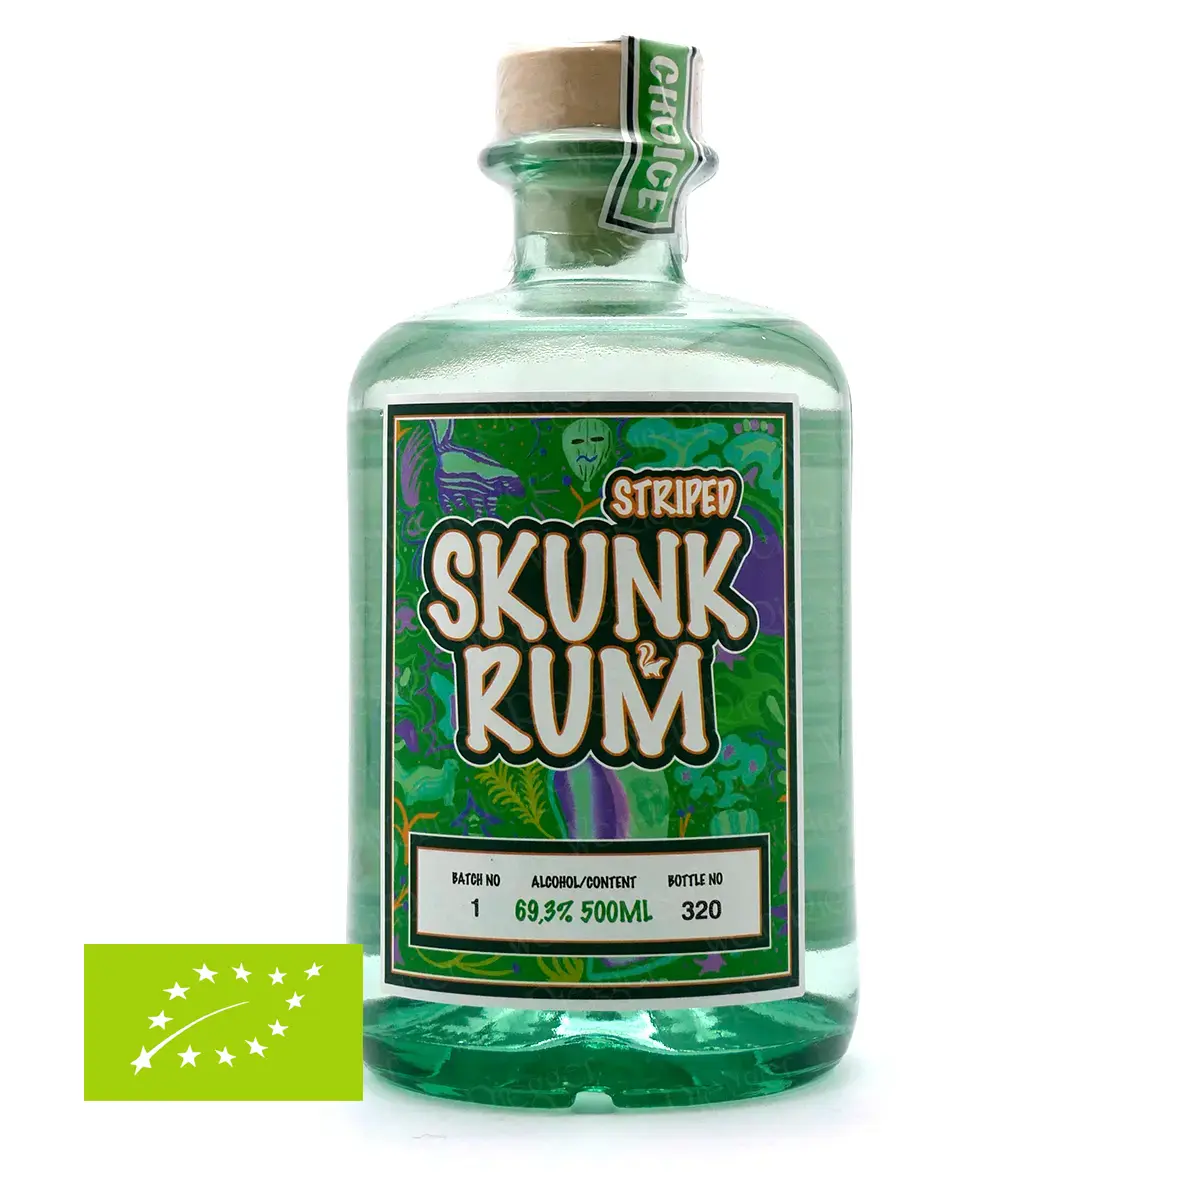 Skunk Rum | STRIPED